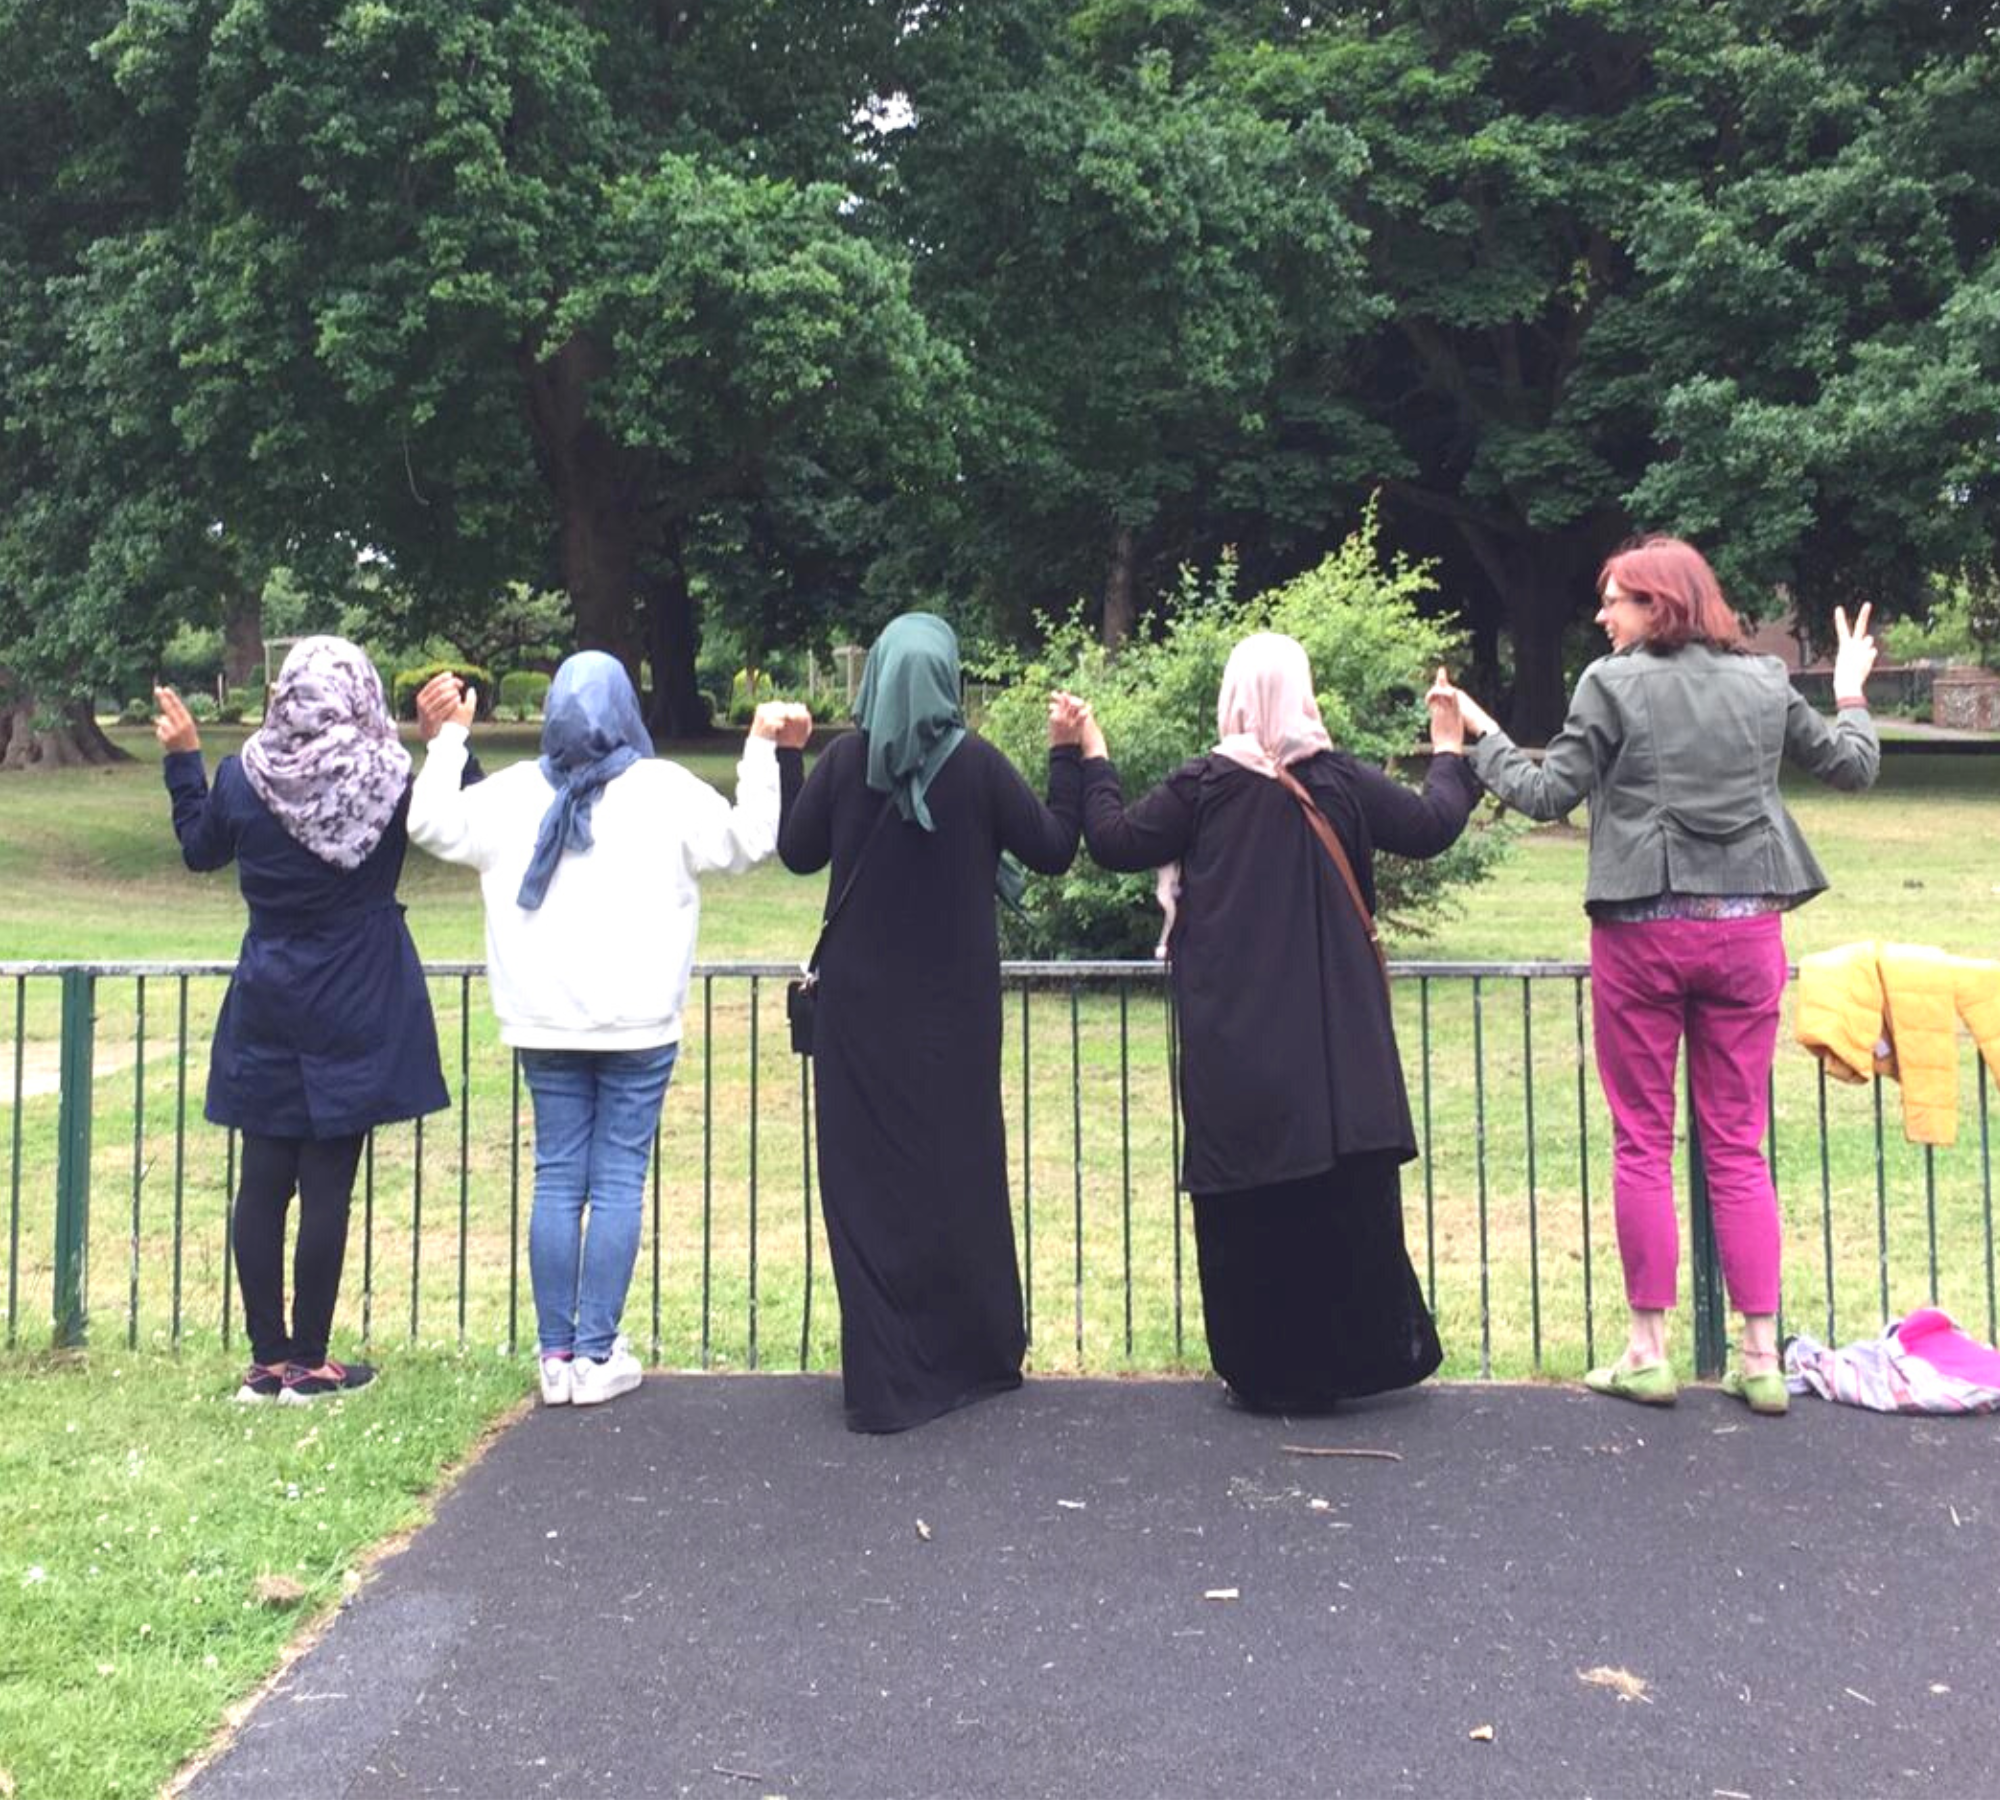 Women refugees in Croydon holding hands